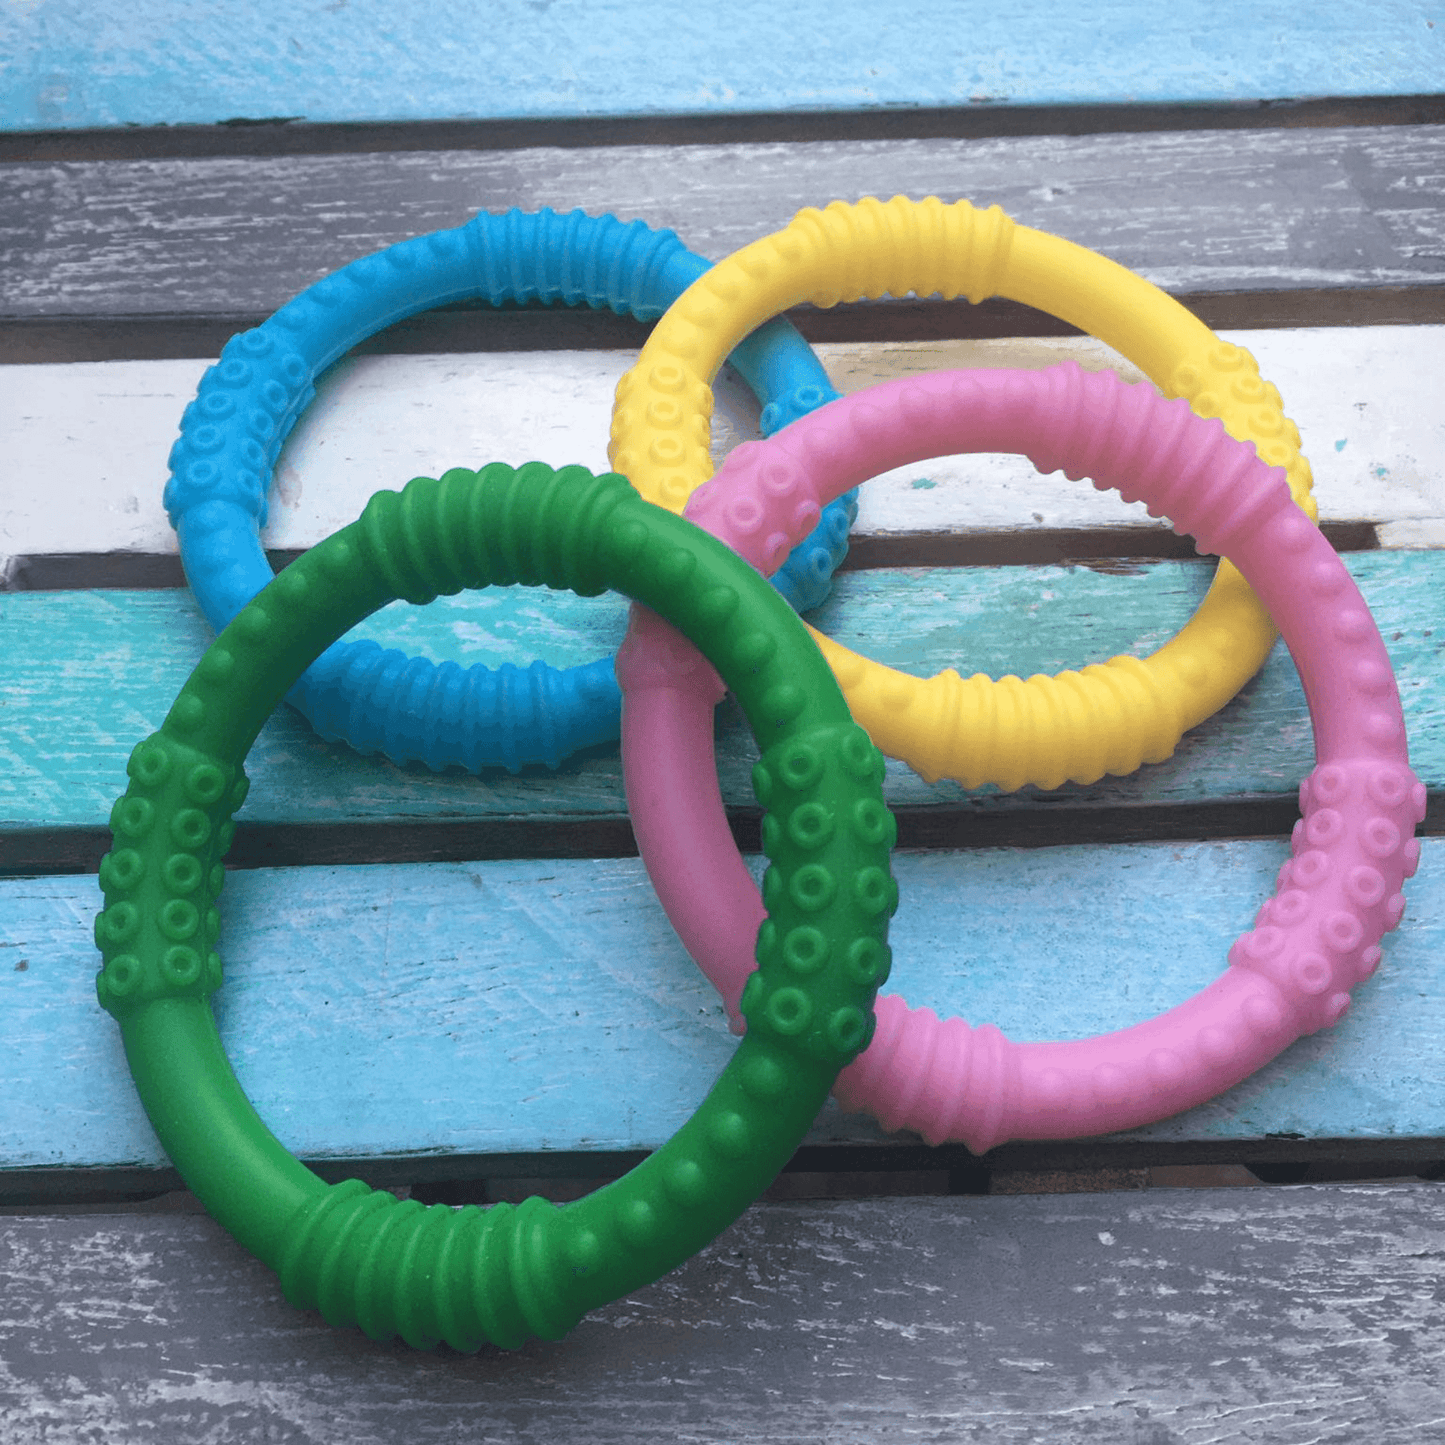 Baby Teether Rings [2 Pack] in 4 Colors